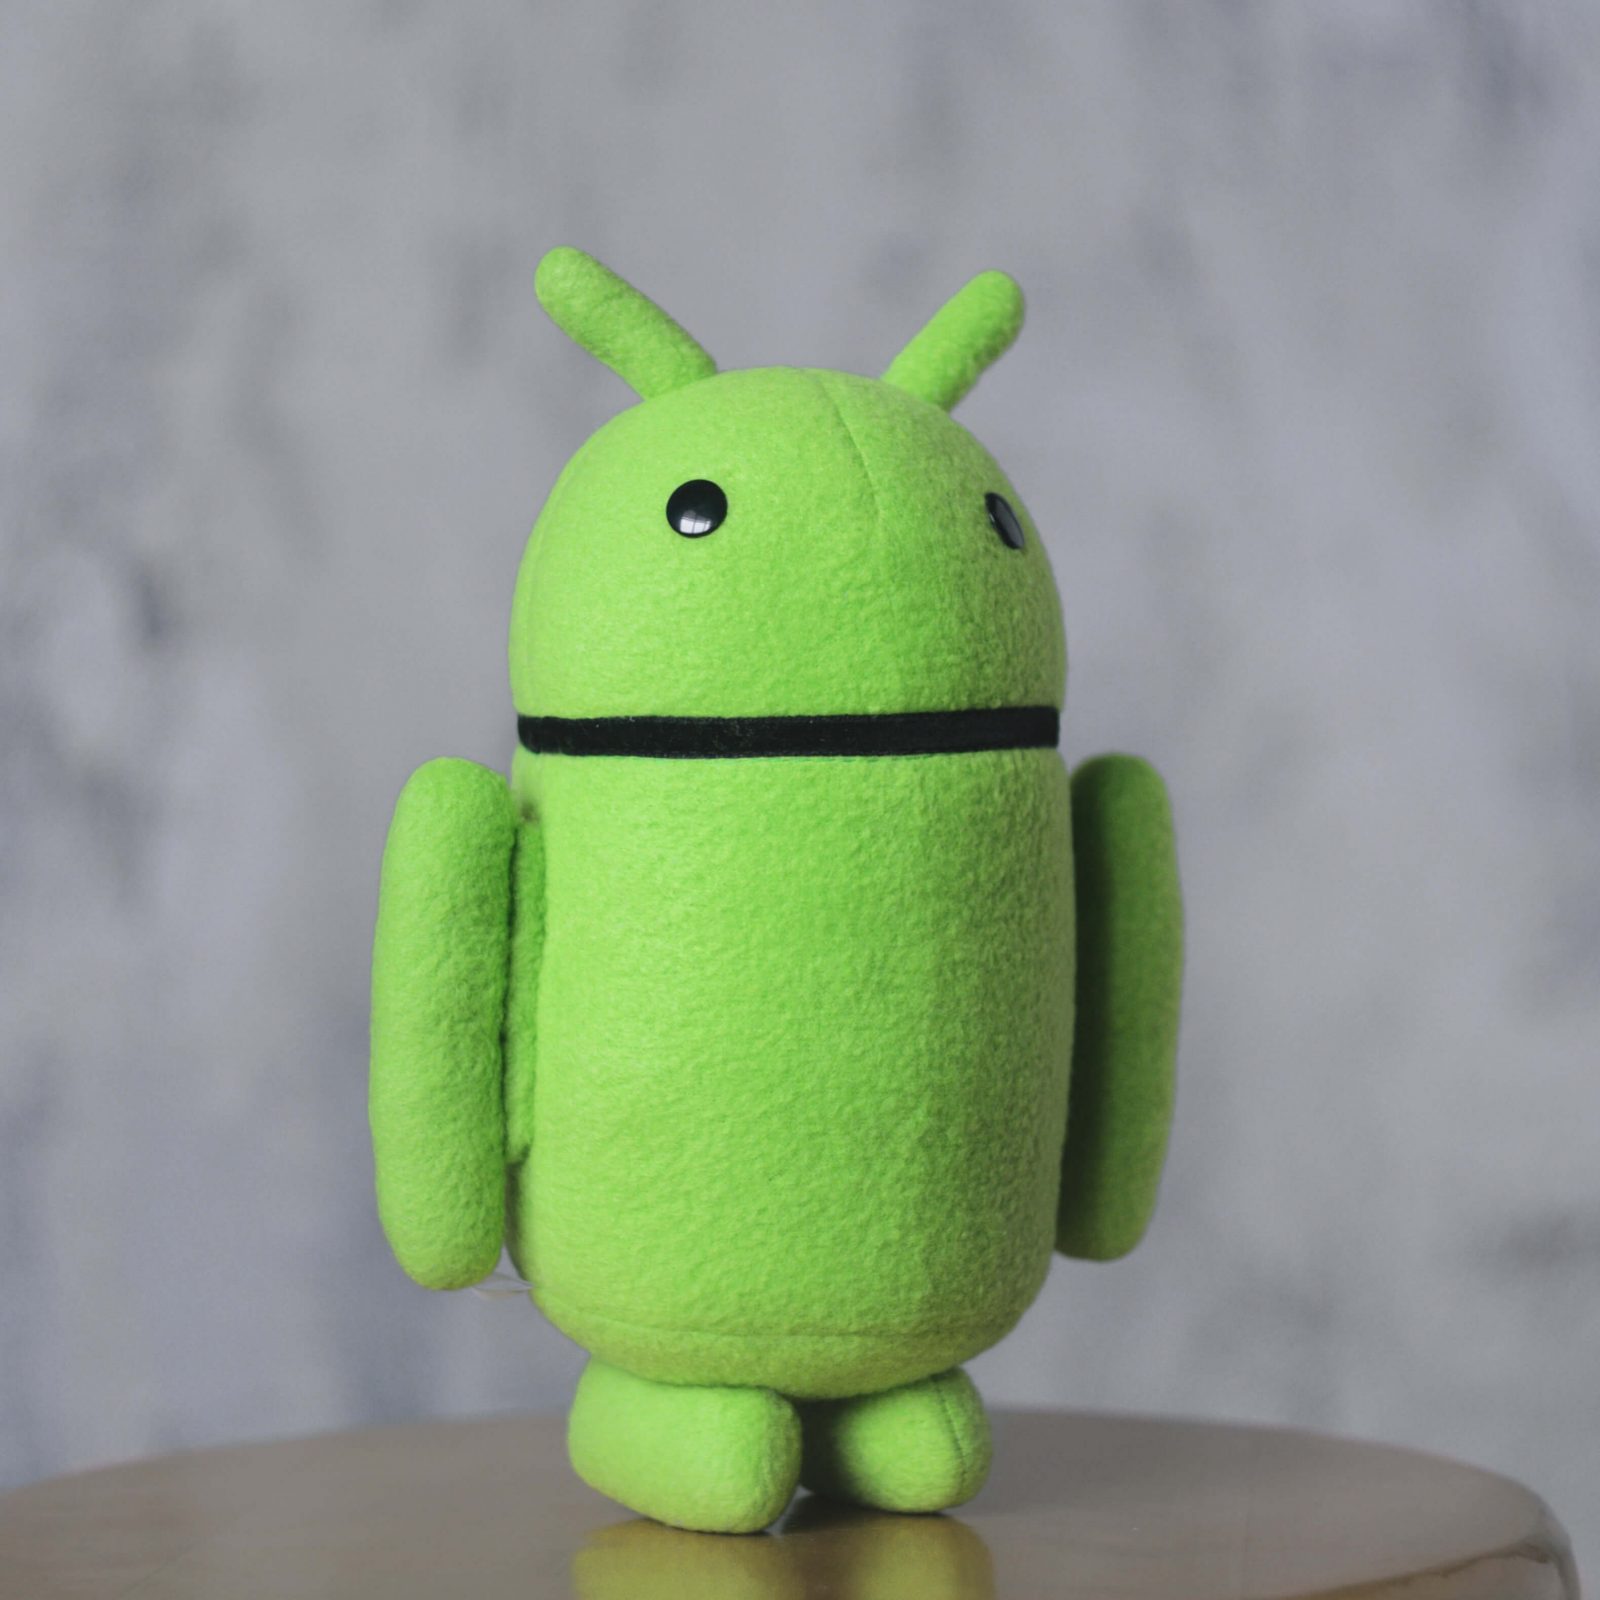 Toy android. Андроид игрушка. Игрушка андроид своими руками. Картинки игрушки андроид. Игрушка андроид робот купить зеленый.